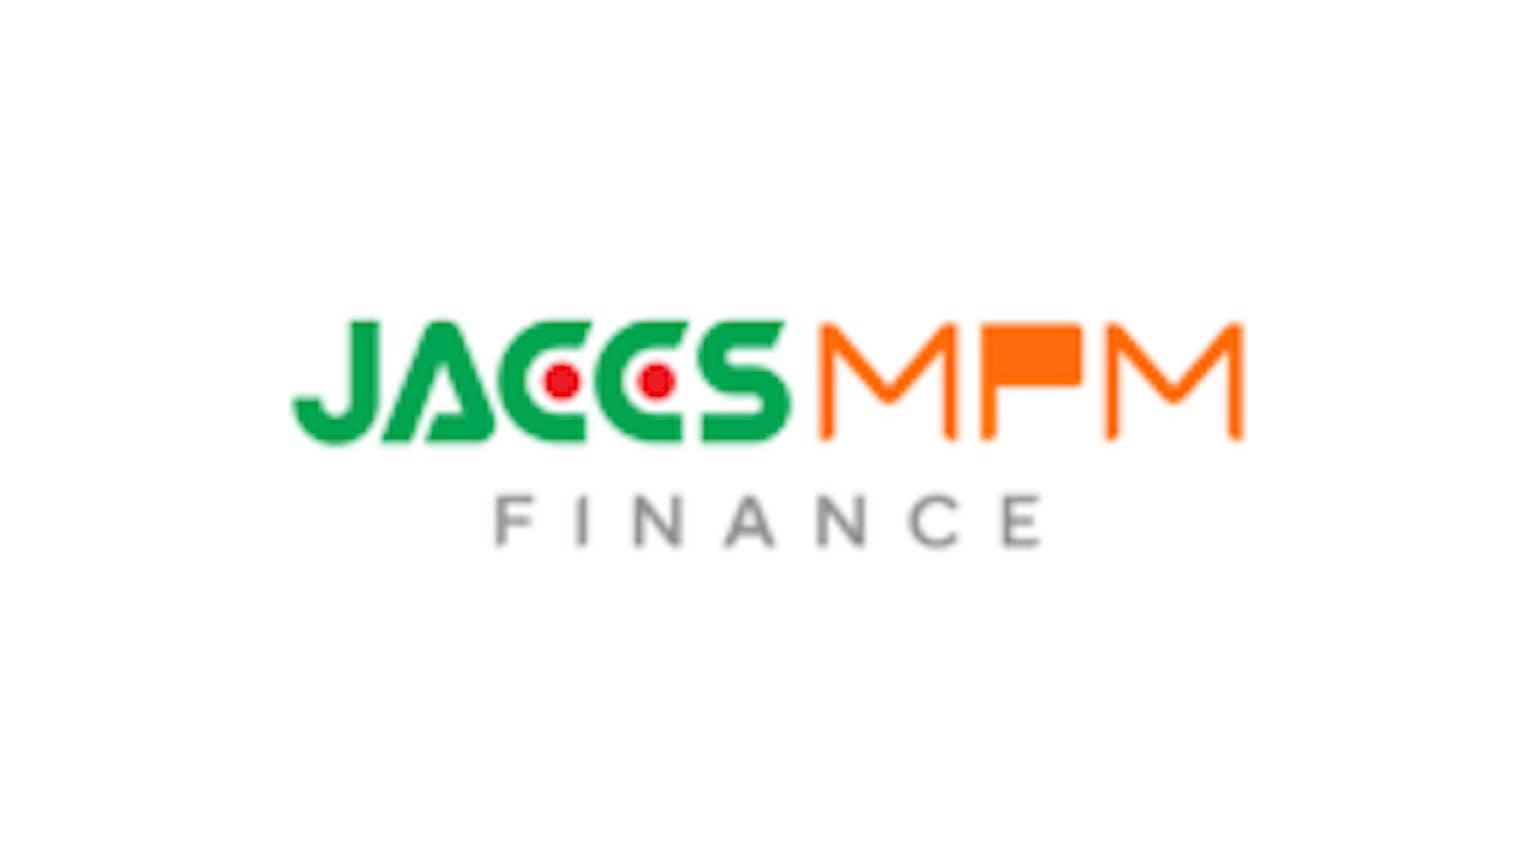 JACCS MFM Finance